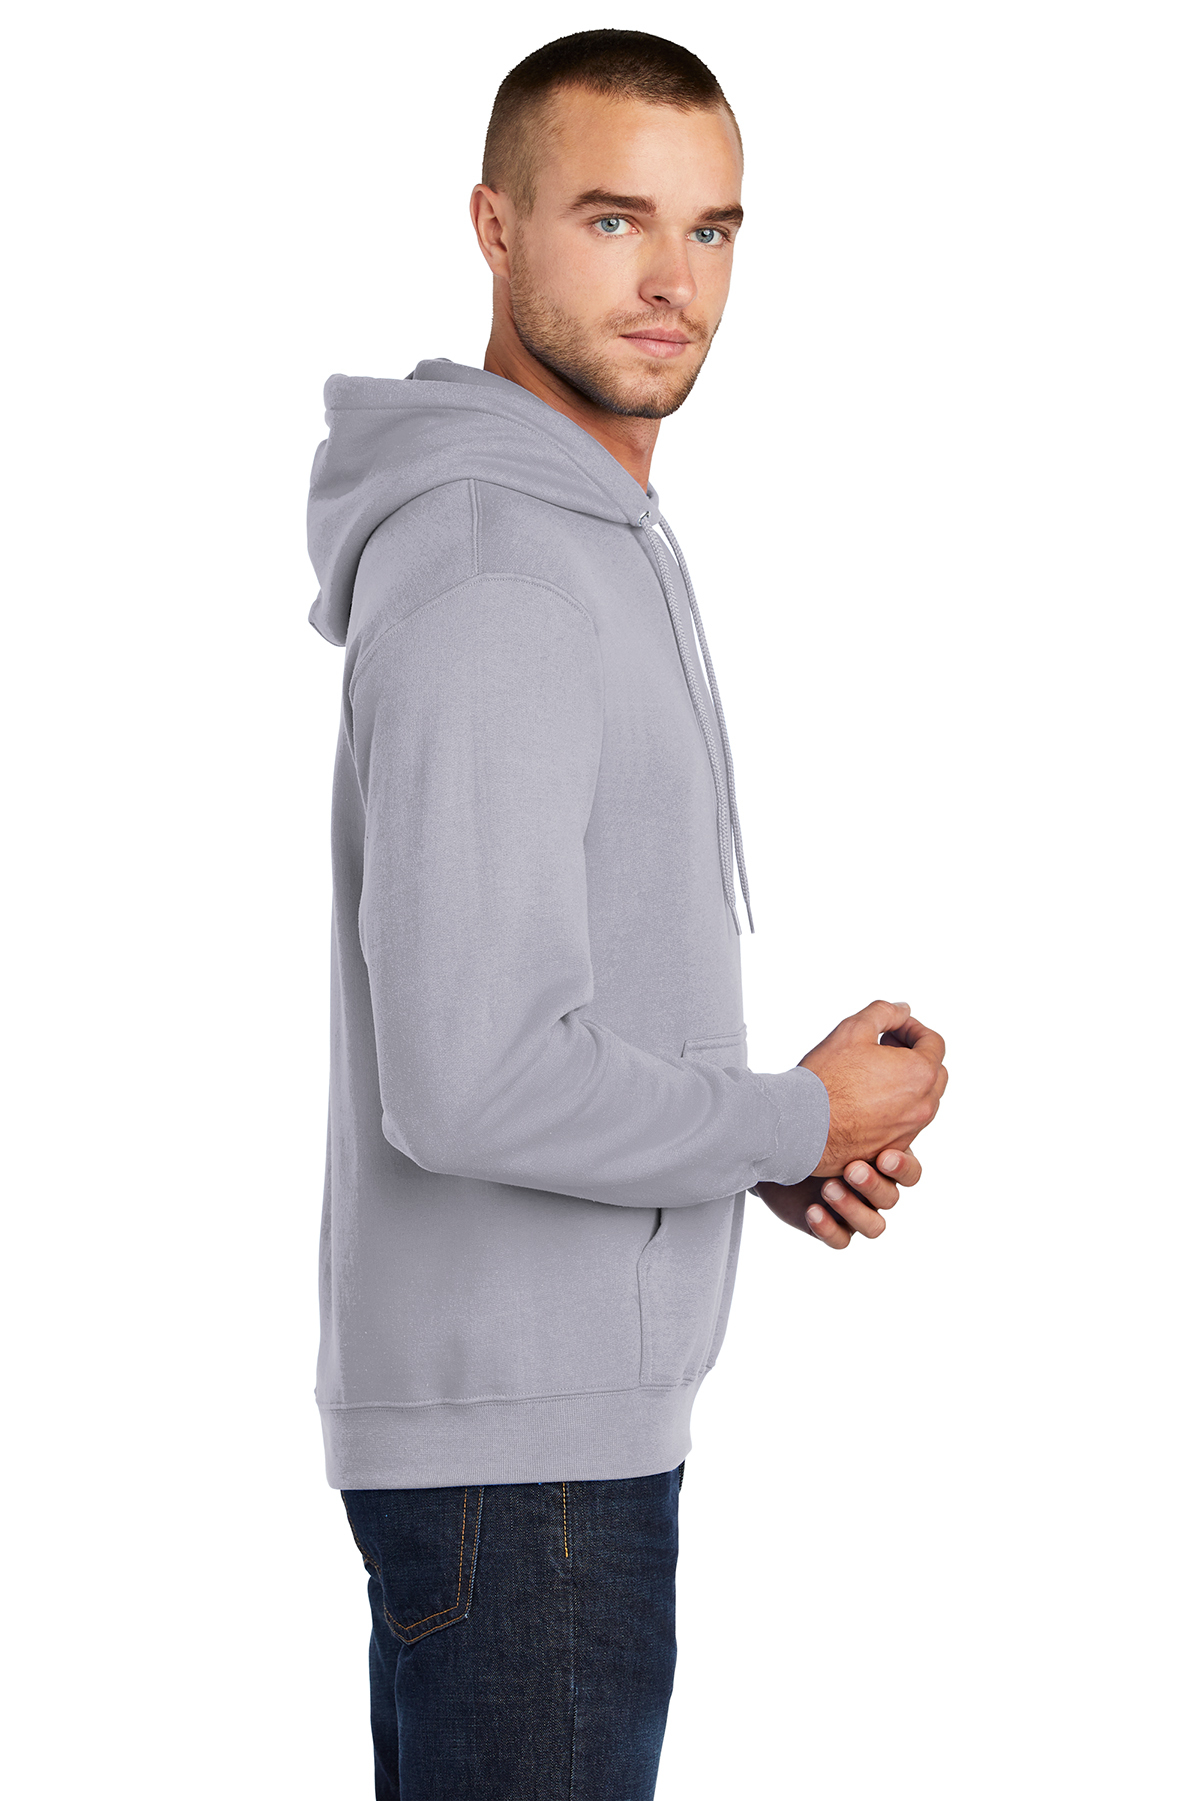 Port & Company Core Fleece Pullover Hooded Sweatshirt | Product ...